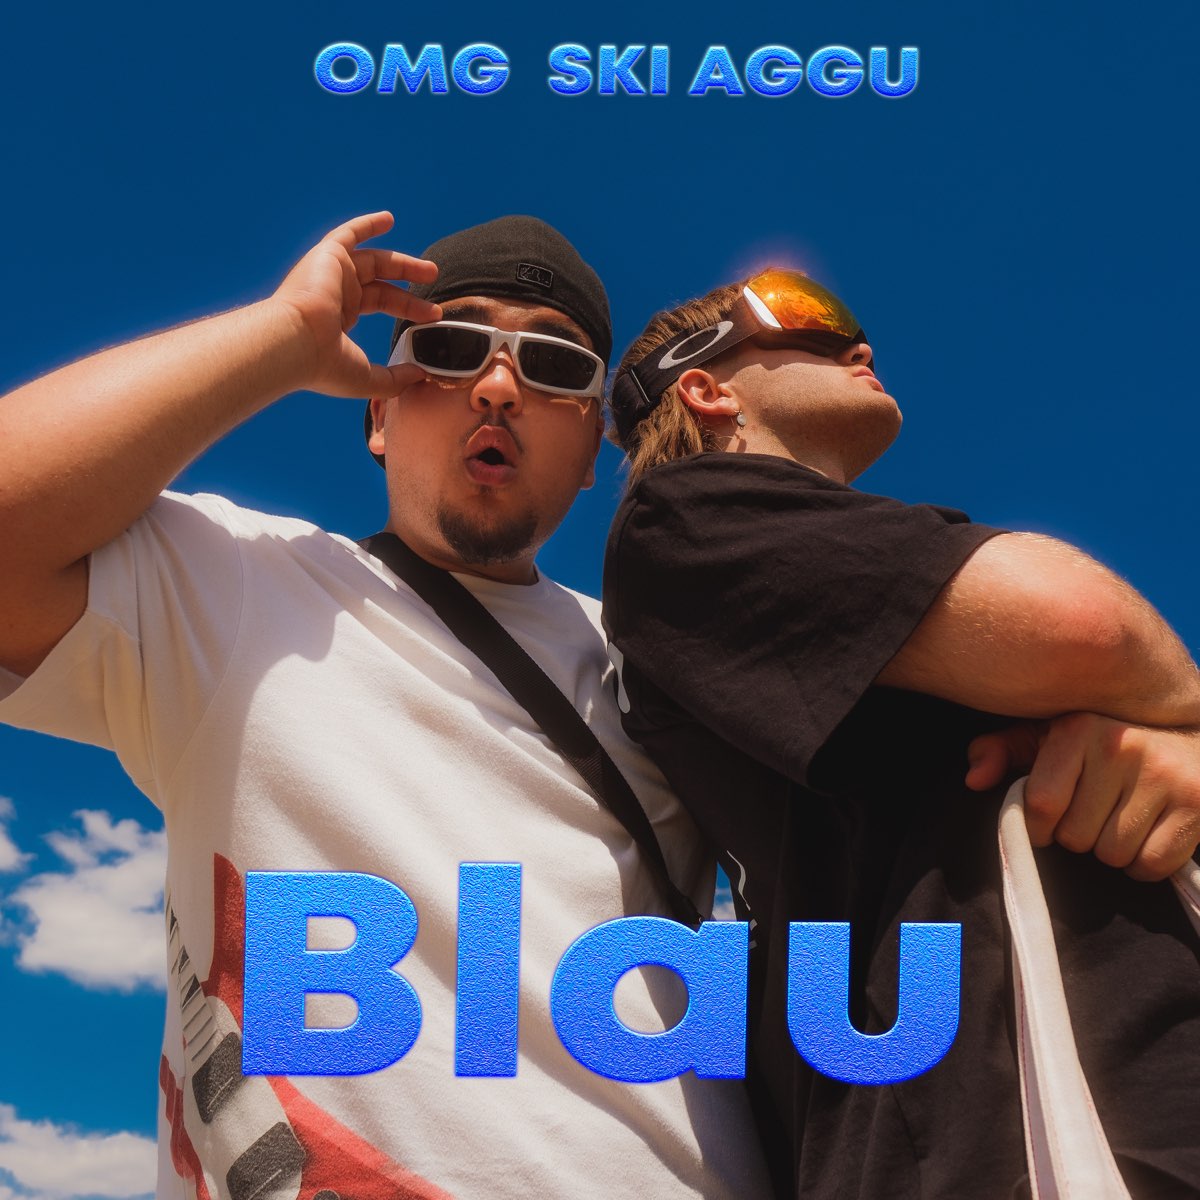 Ski aggu без очков. Aggu. "Ski aggu" && ( исполнитель | группа | музыка | Music | Band | artist ) && (фото | photo). Ski aggu name. Sky aggu без очков.